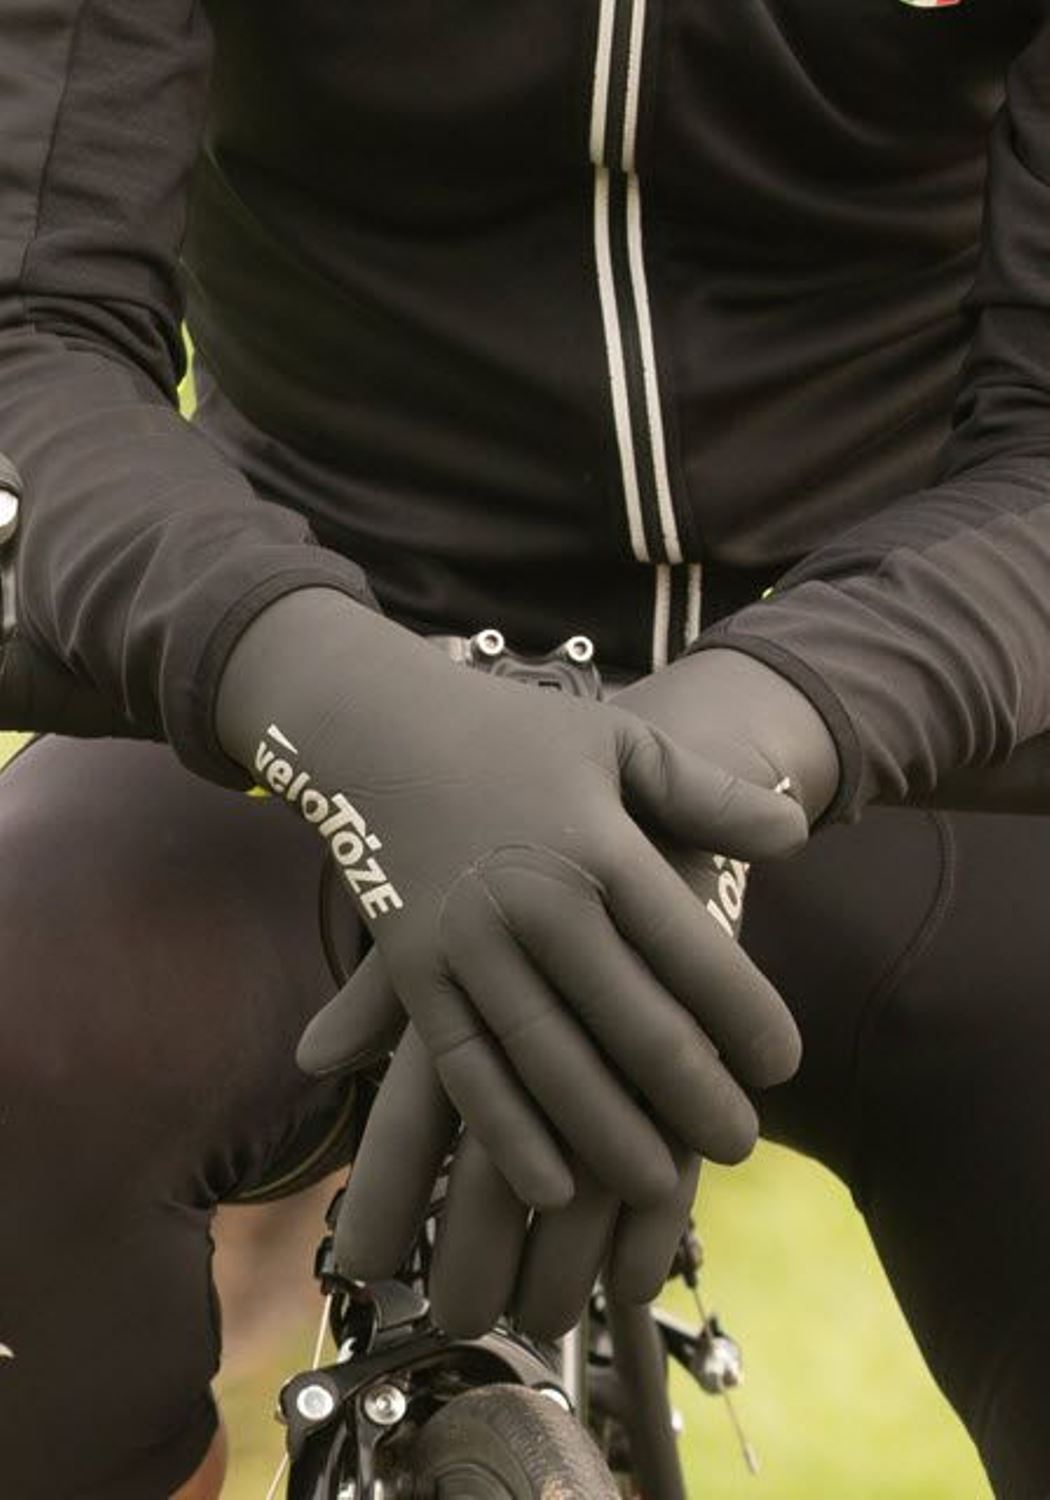 Large/X-Large Neoprene Long Cuff Gloves